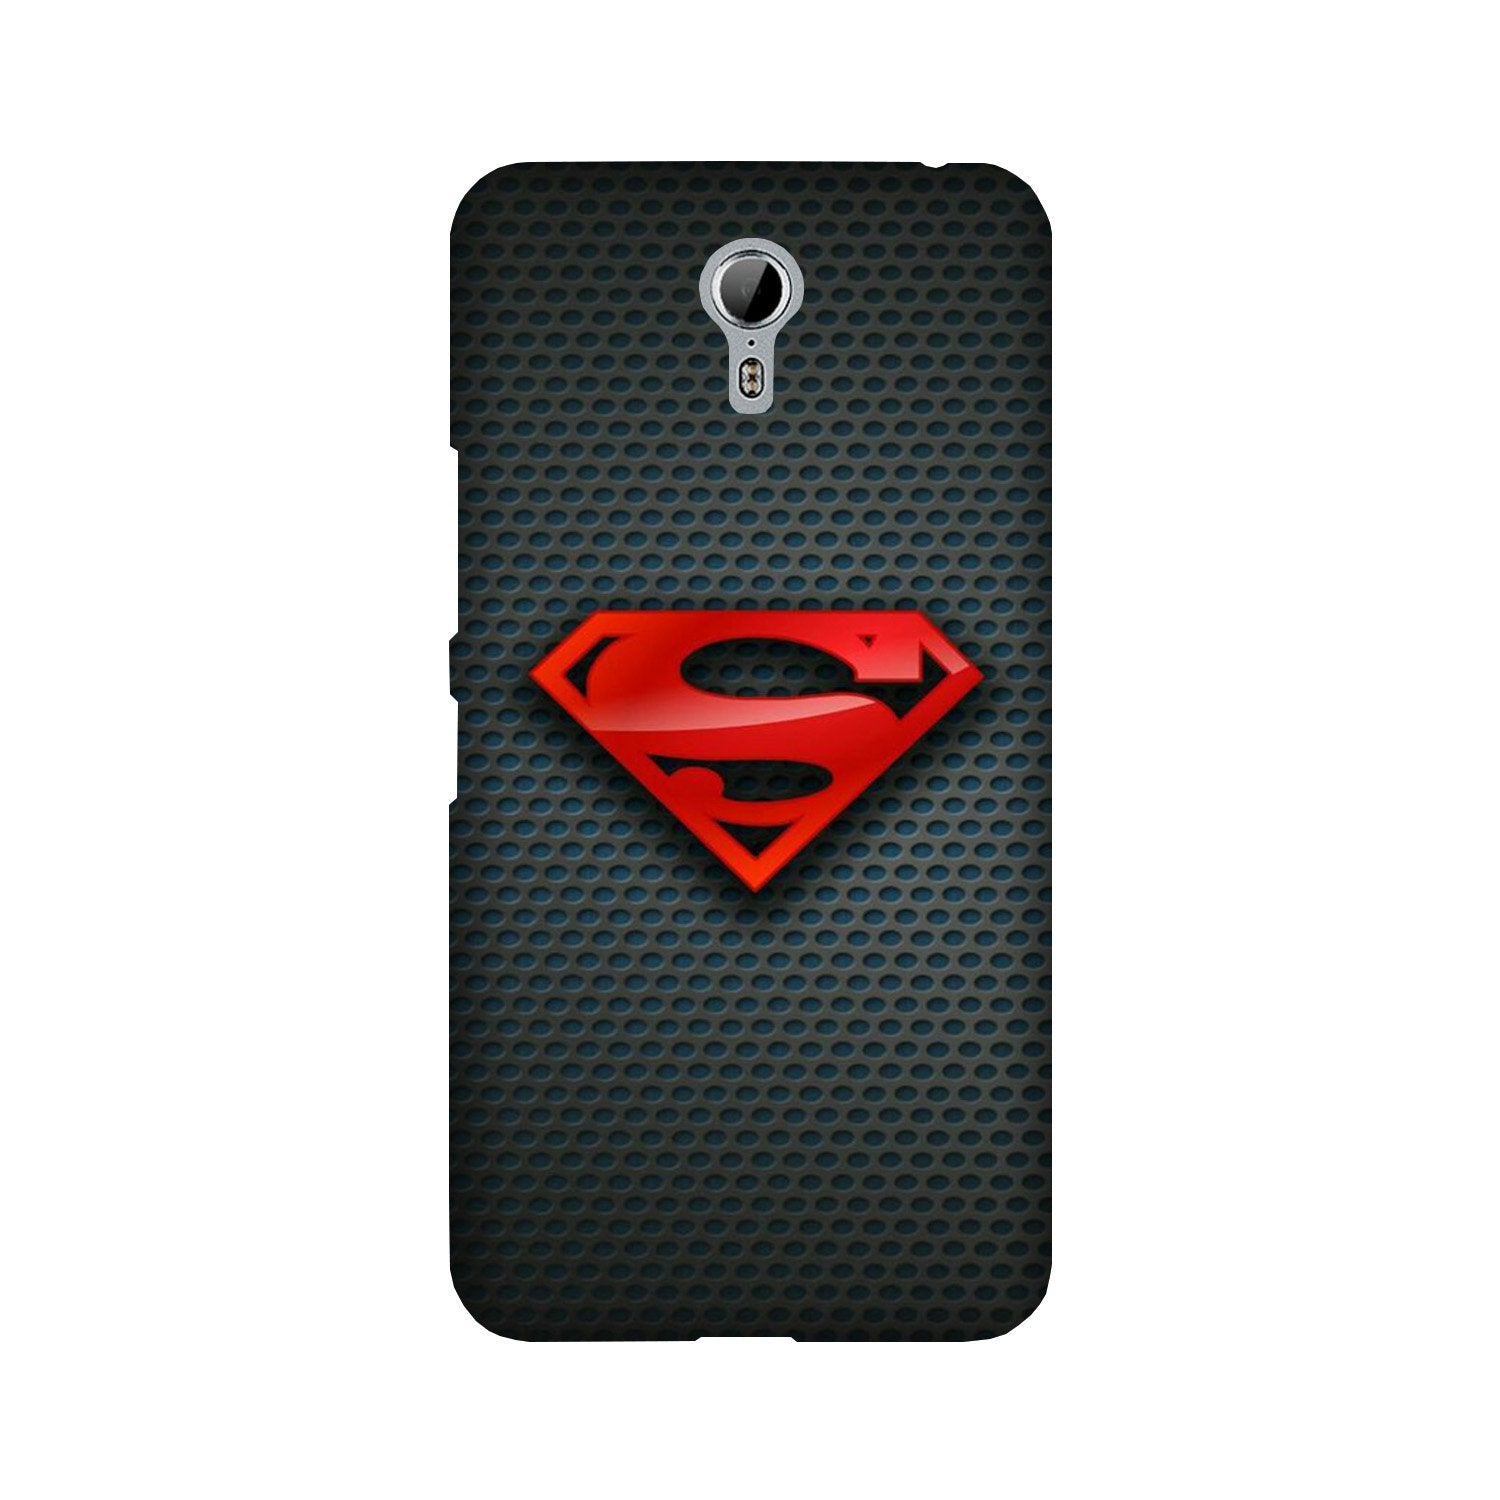 Superman Case for Lenovo Zuk Z1 (Design No. 247)